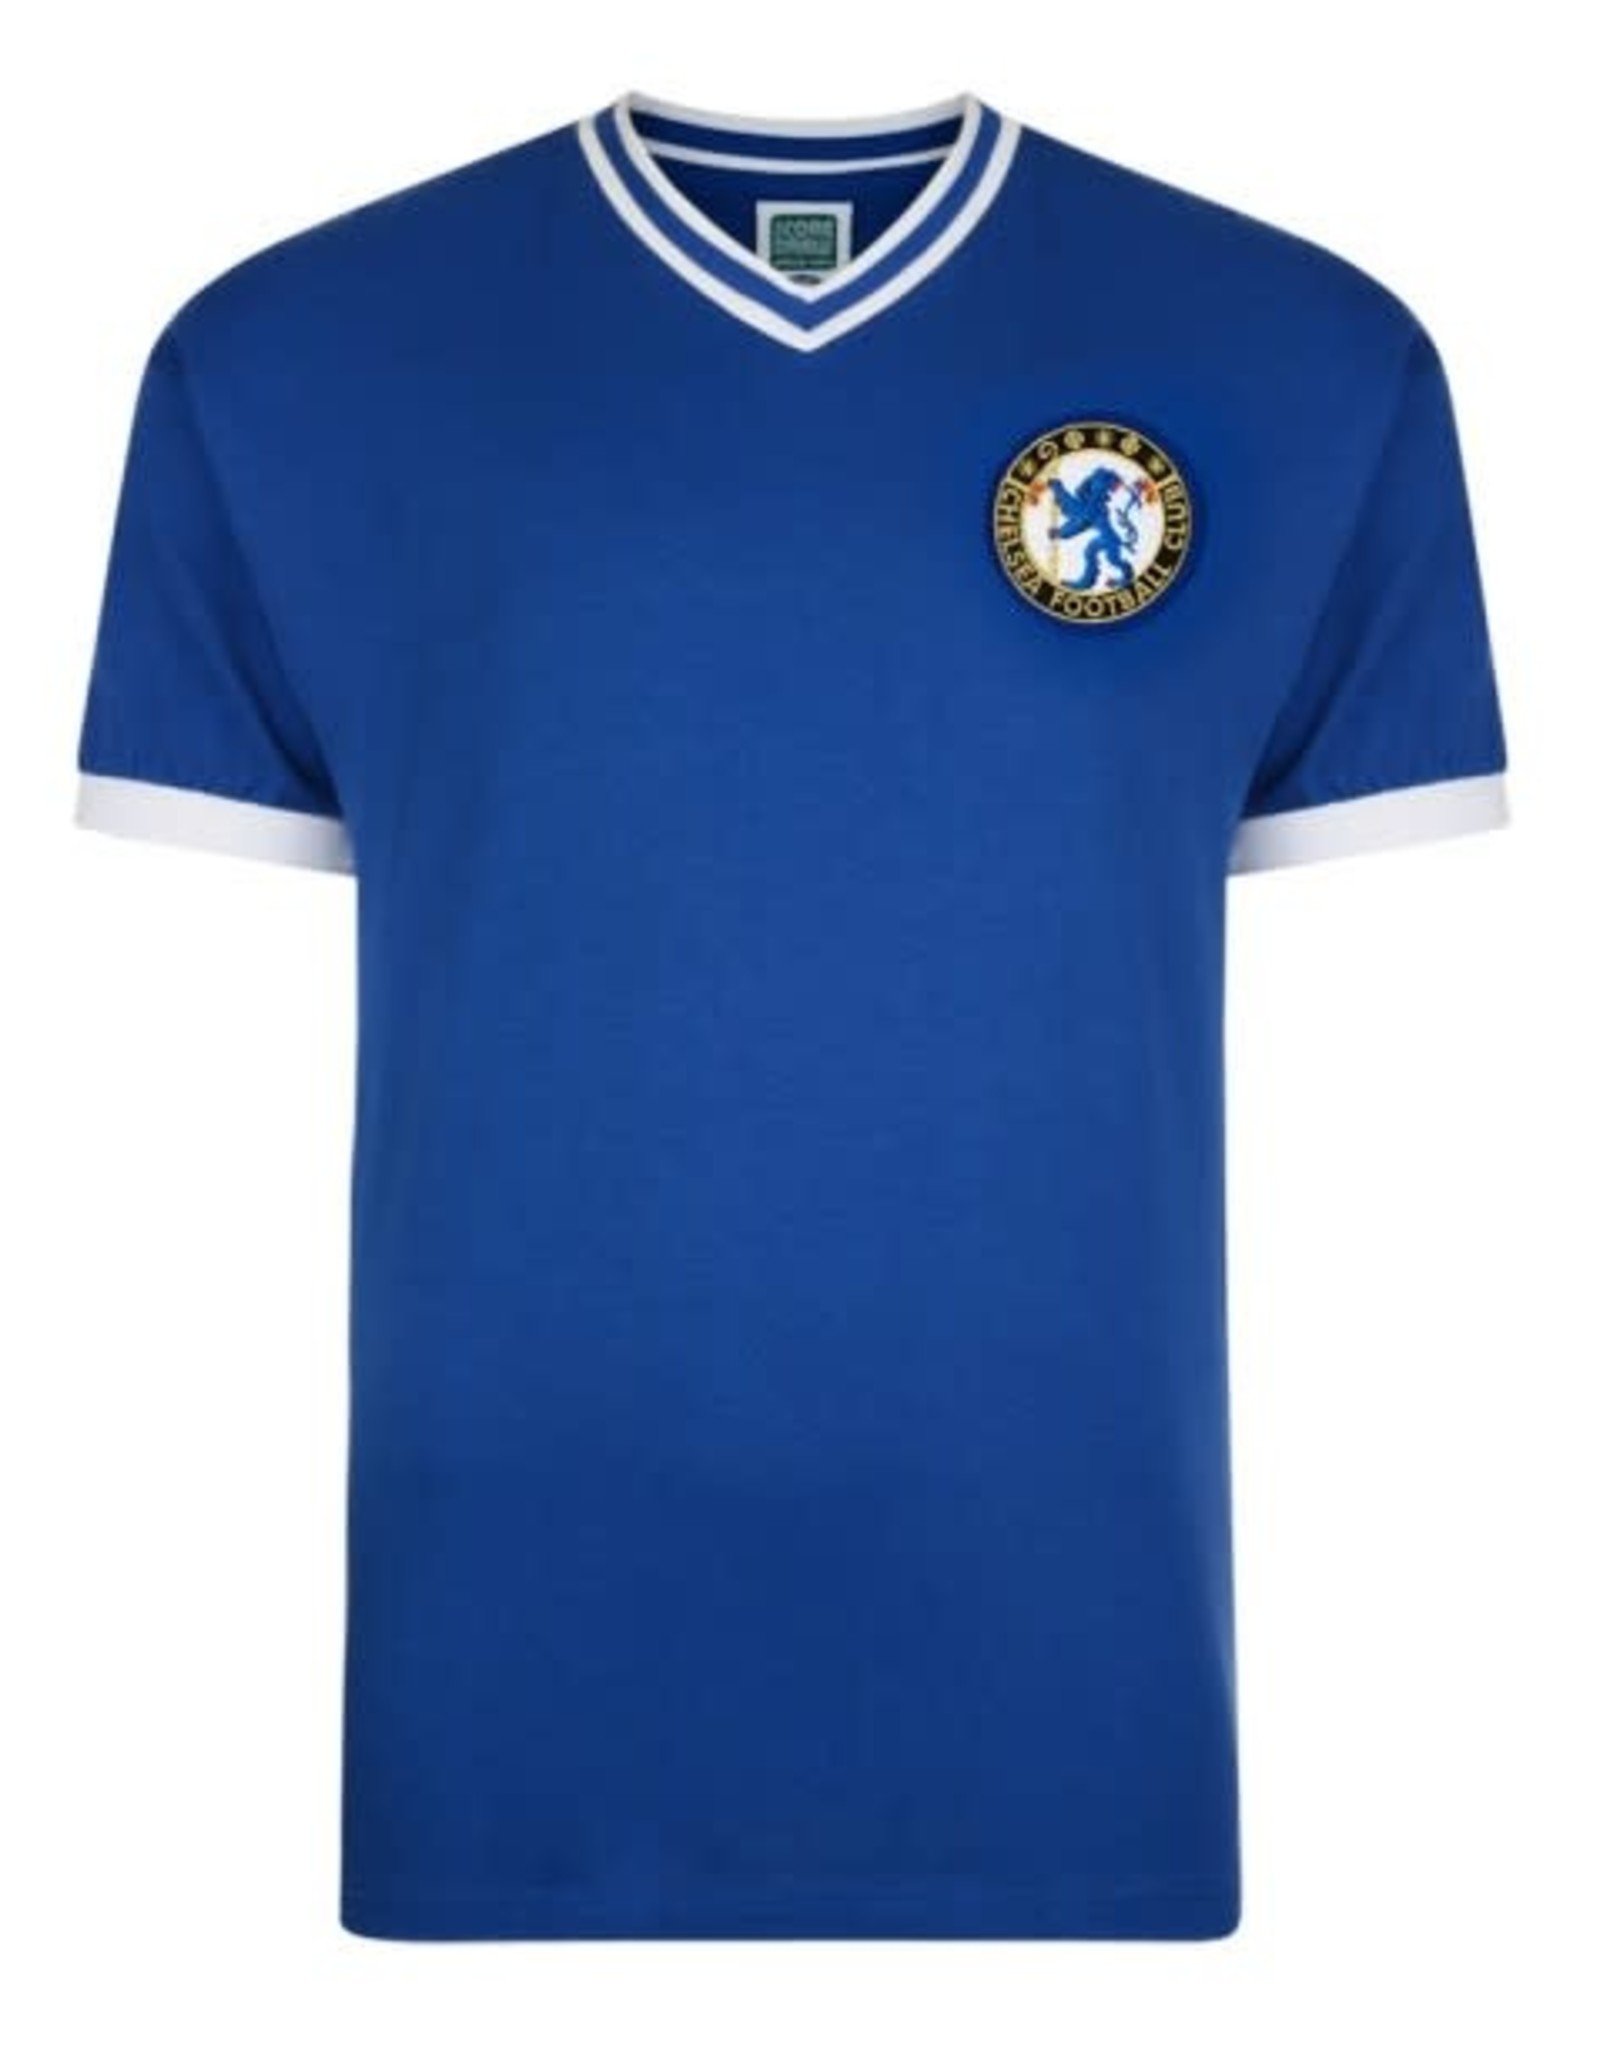 Chelsea 1960 Retro Shirt